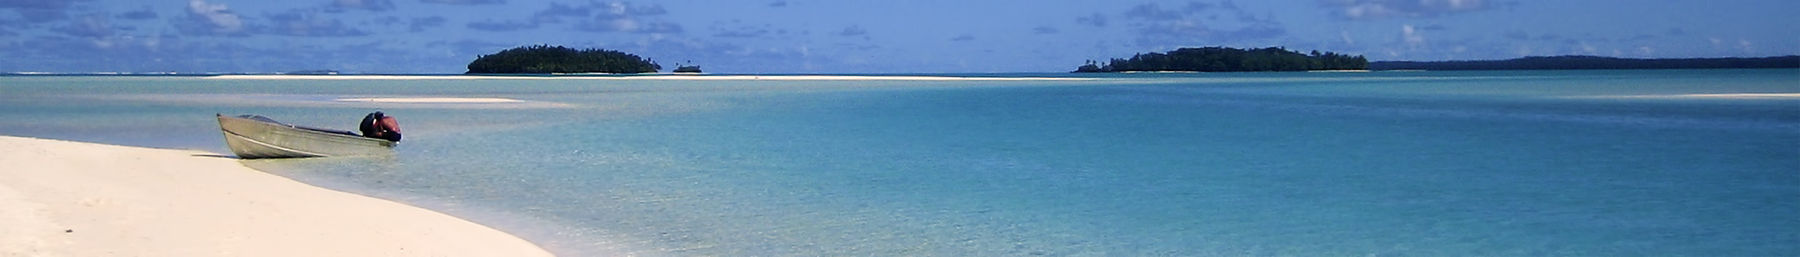 Cook -szigetek strand banner.jpg